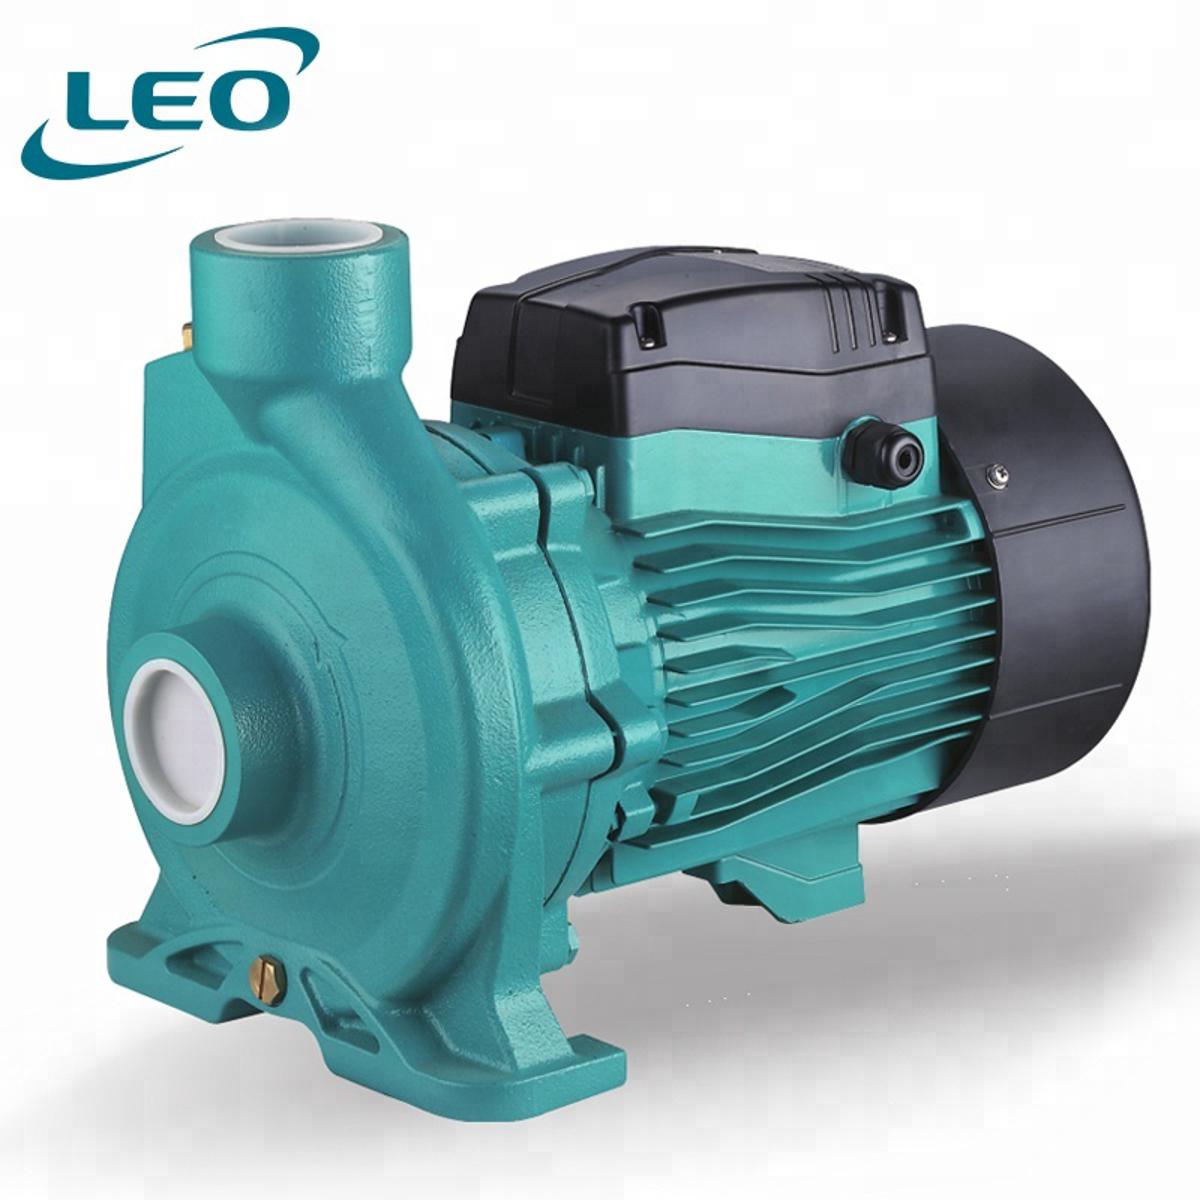 LEO - AC-400C2- 4000W - 5.5 HP- Clean Water Centrifugal Pump- 380V~400V THREE PHASE- SIZE:- 2" X 2"- ITALY Patent DESIGN European STANDARD